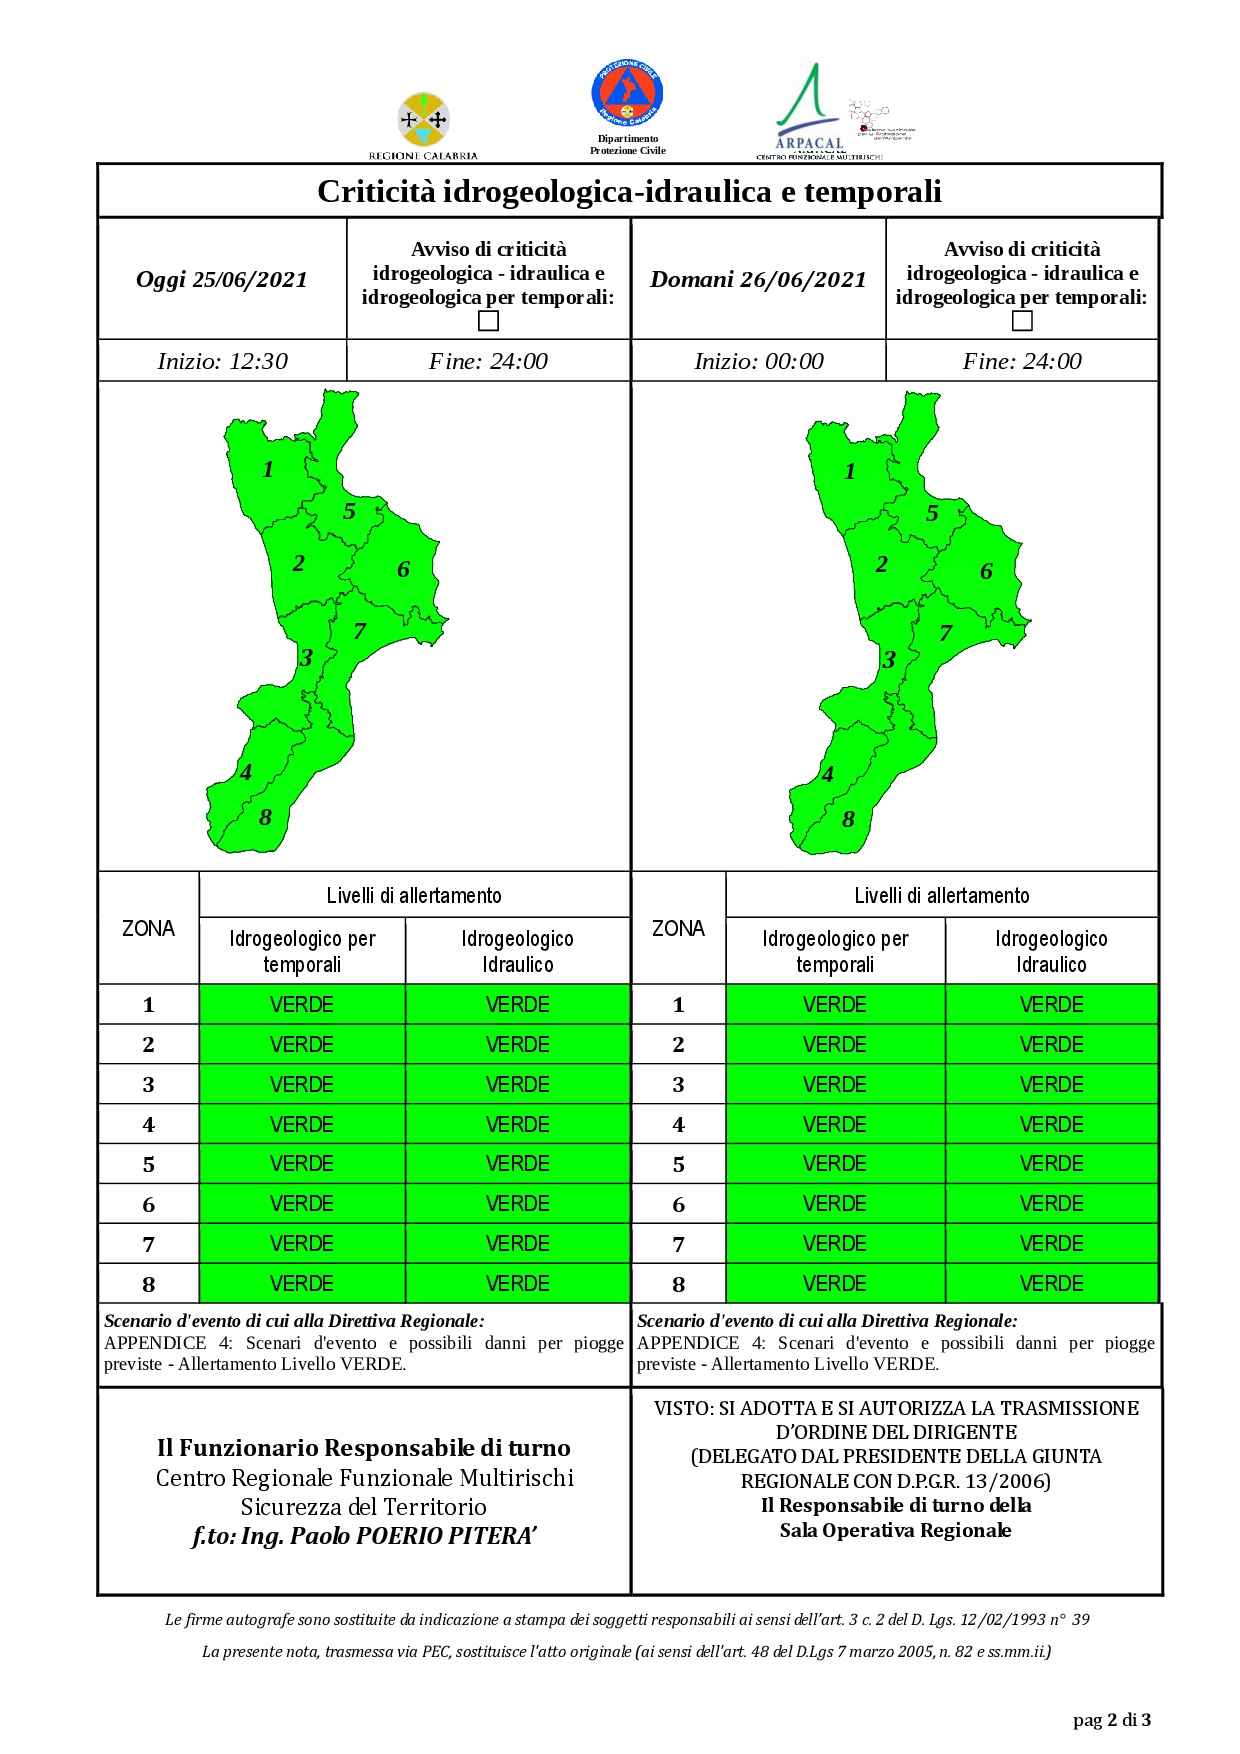 Criticità idrogeologica-idraulica e temporali in Calabria 25-06-2021